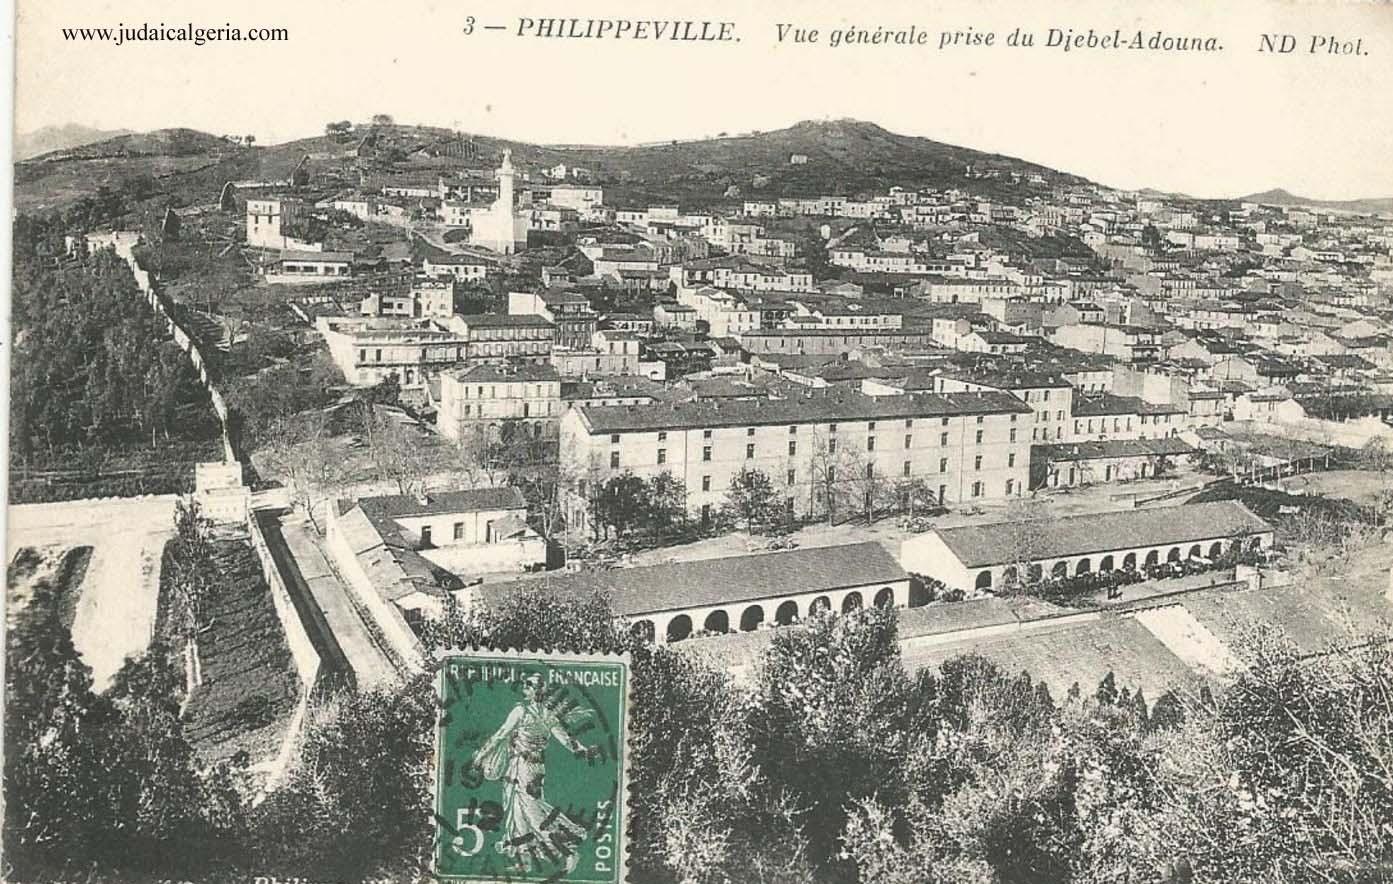 Philippeville vue generale